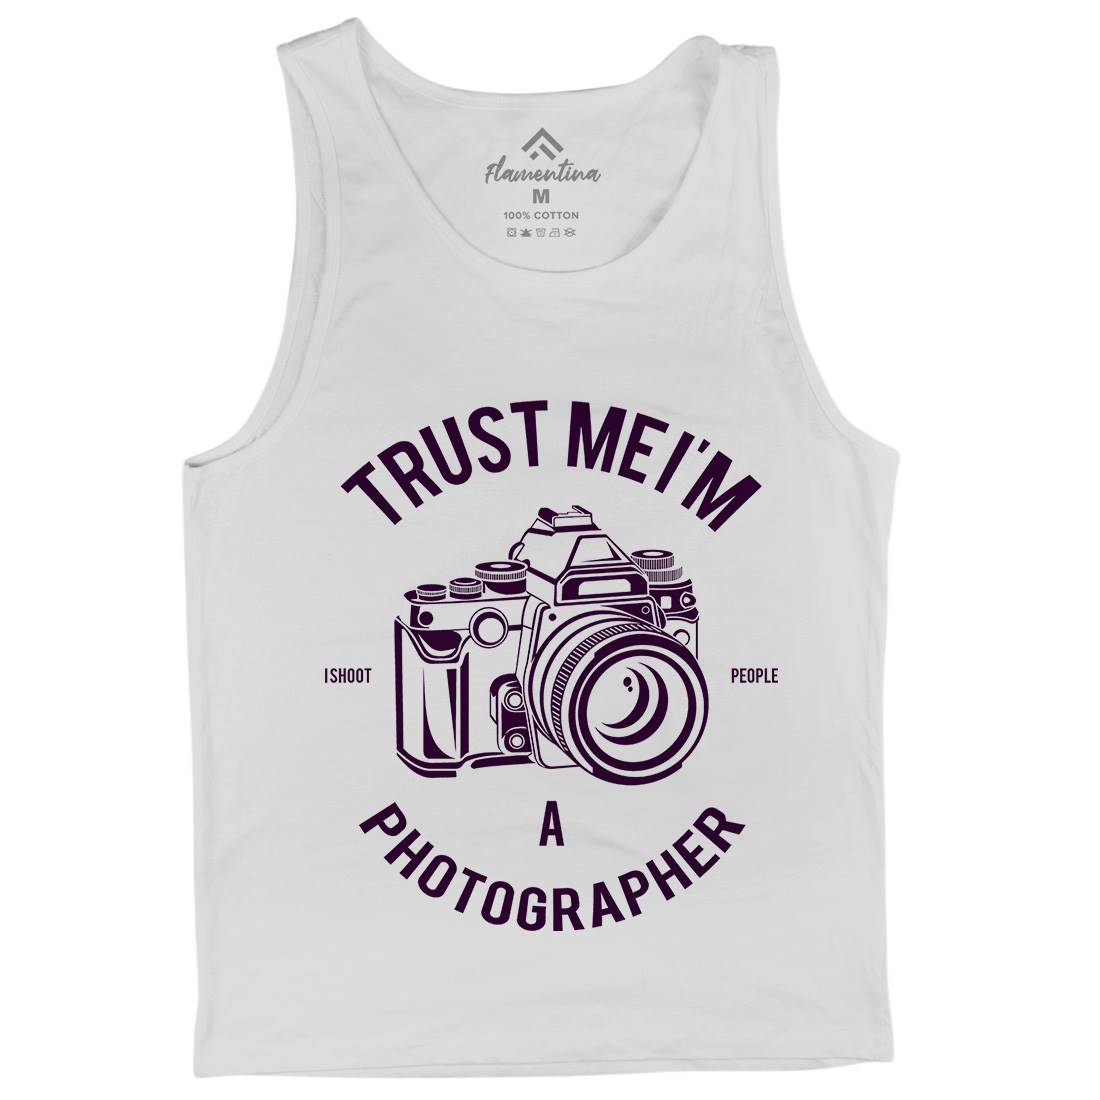 Photographer Mens Tank Top Vest Media A110